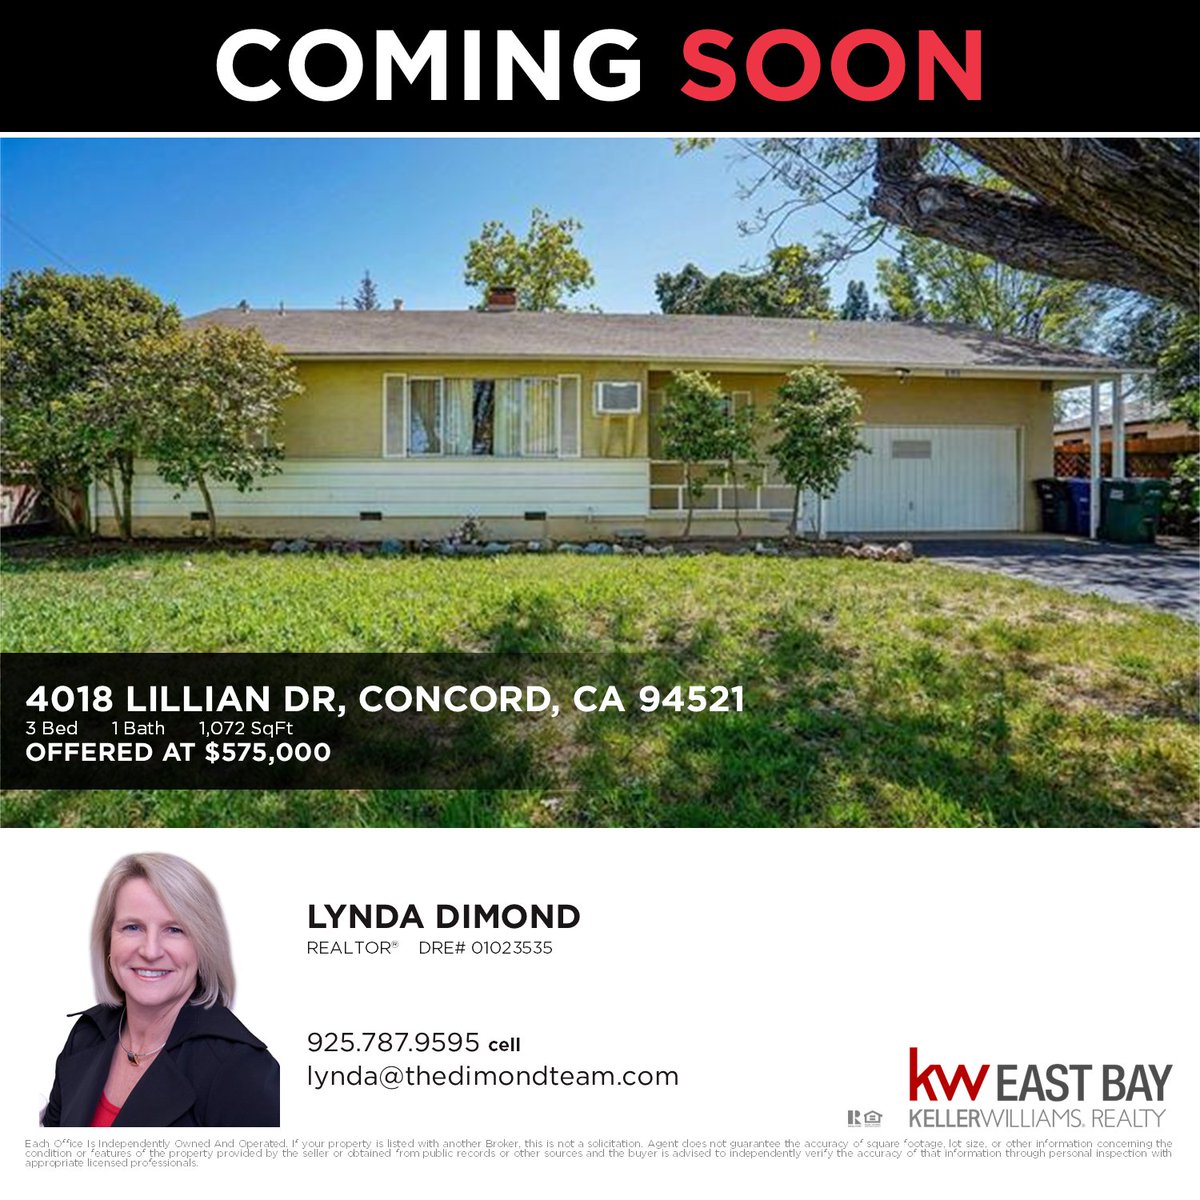 4018 Lillian Dr, Concord, CA 94521 - Coming Soon from Lynda Dimond!

#kellerwilliams #bayarearealestate #bayarearealtor